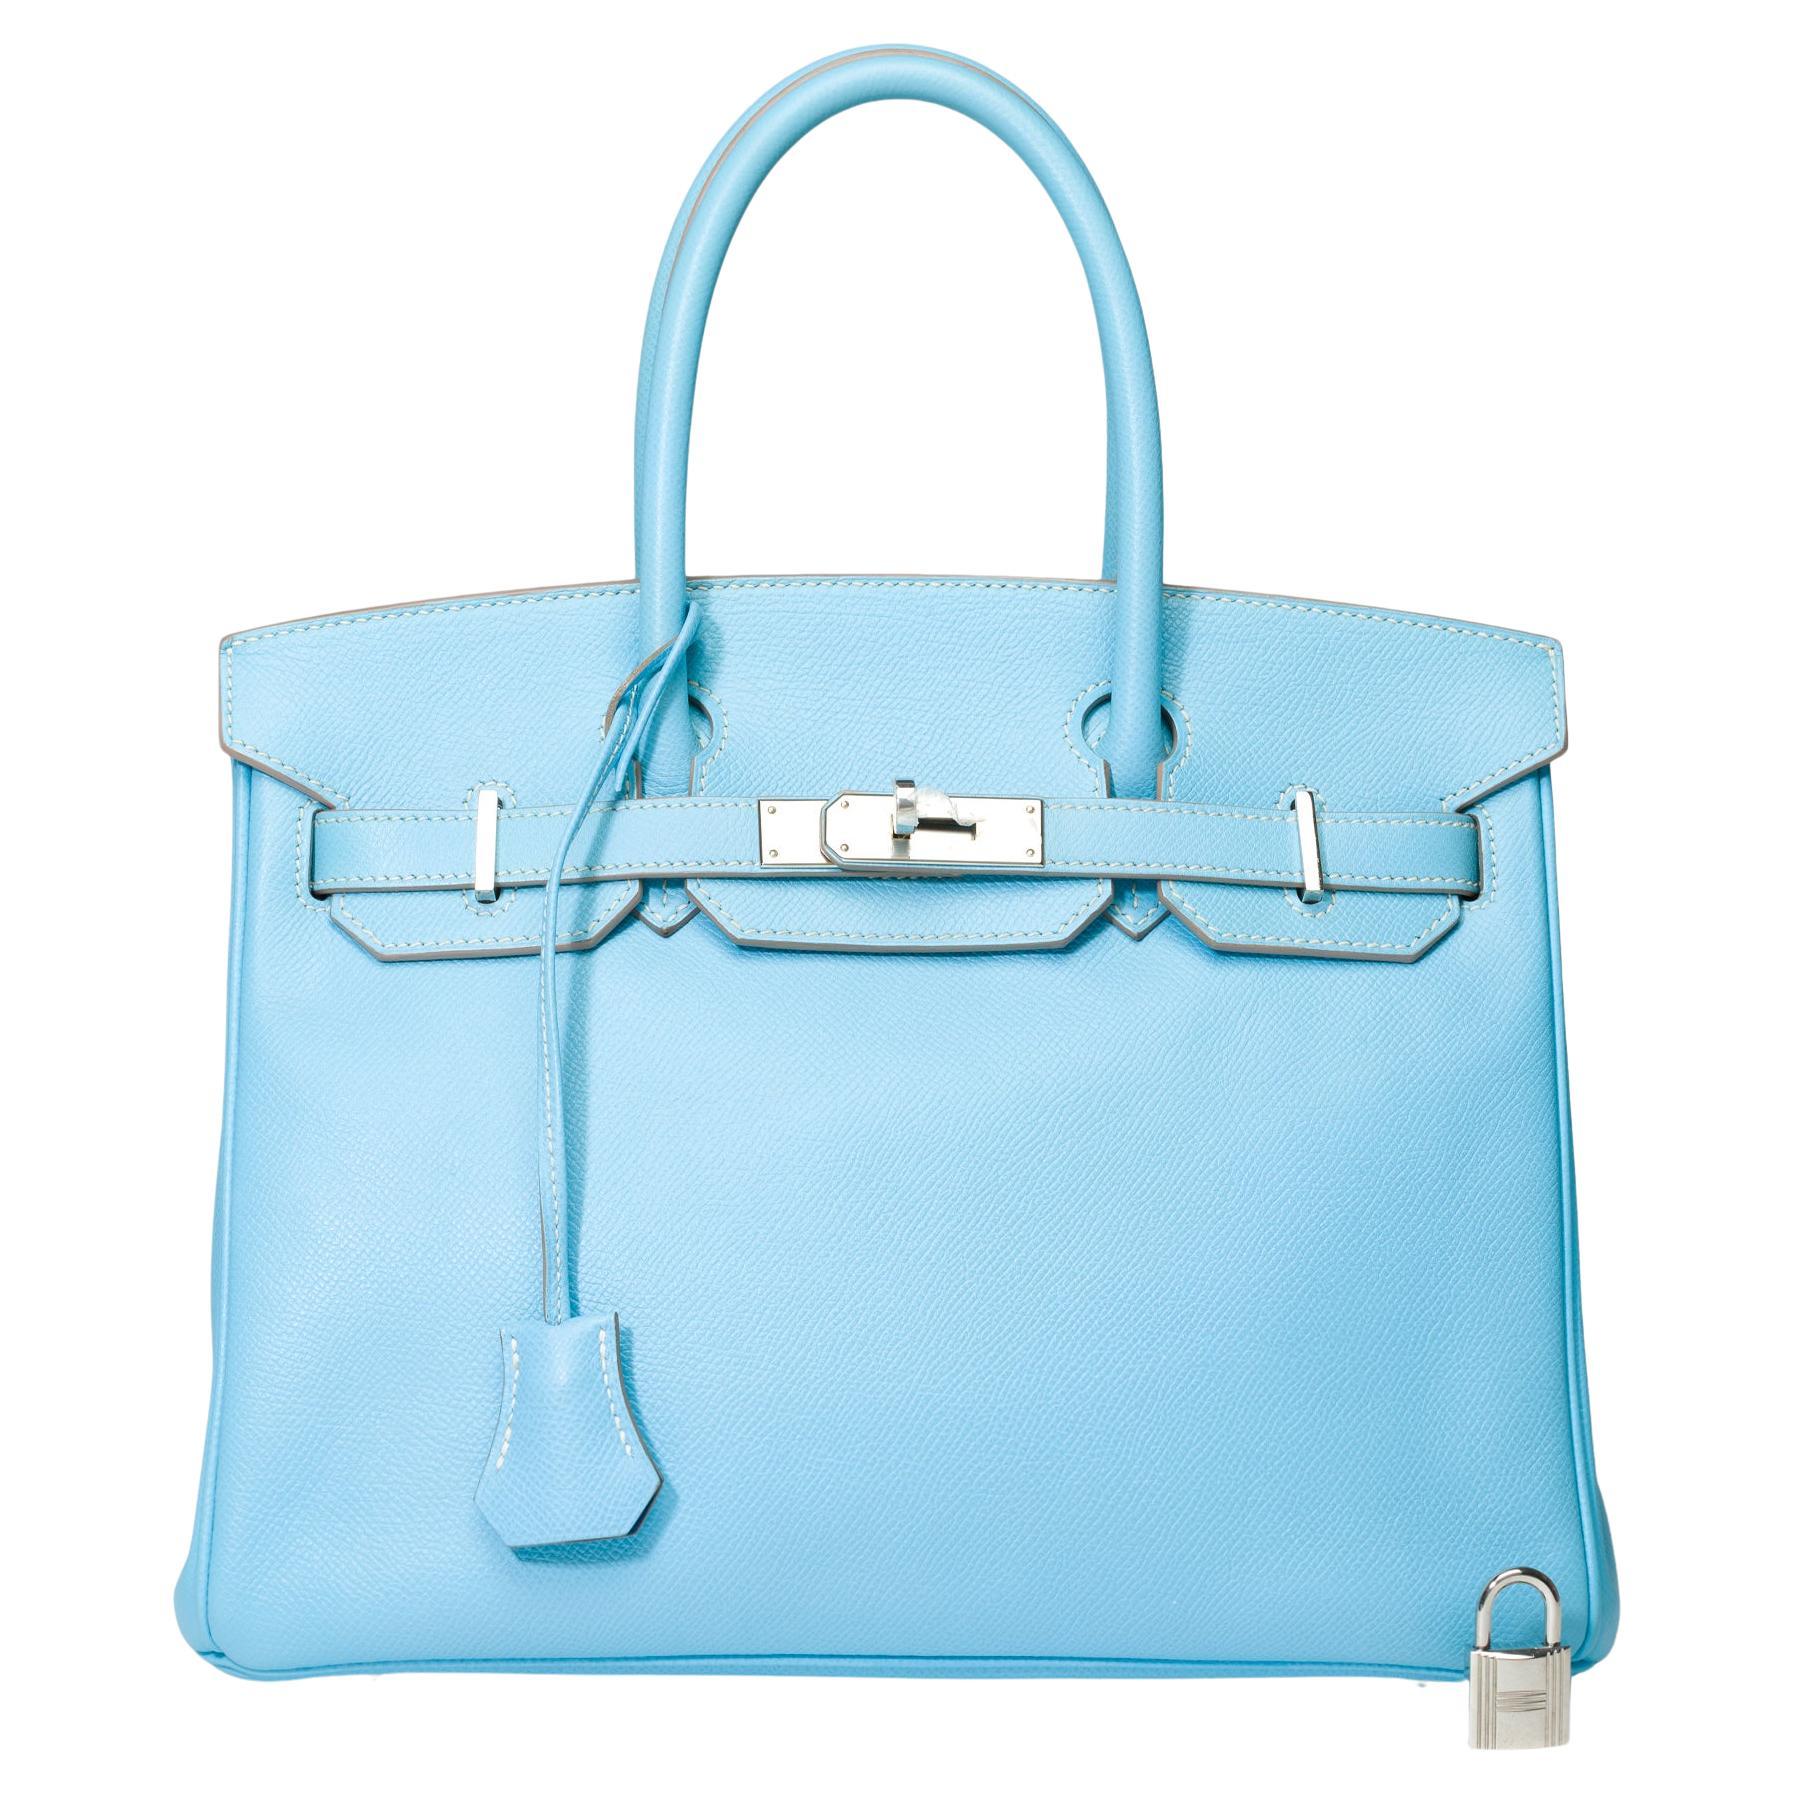 Rare Hermes Birkin 30 Candy Edition handbag in Celeste Blue Epsom leather, SHW